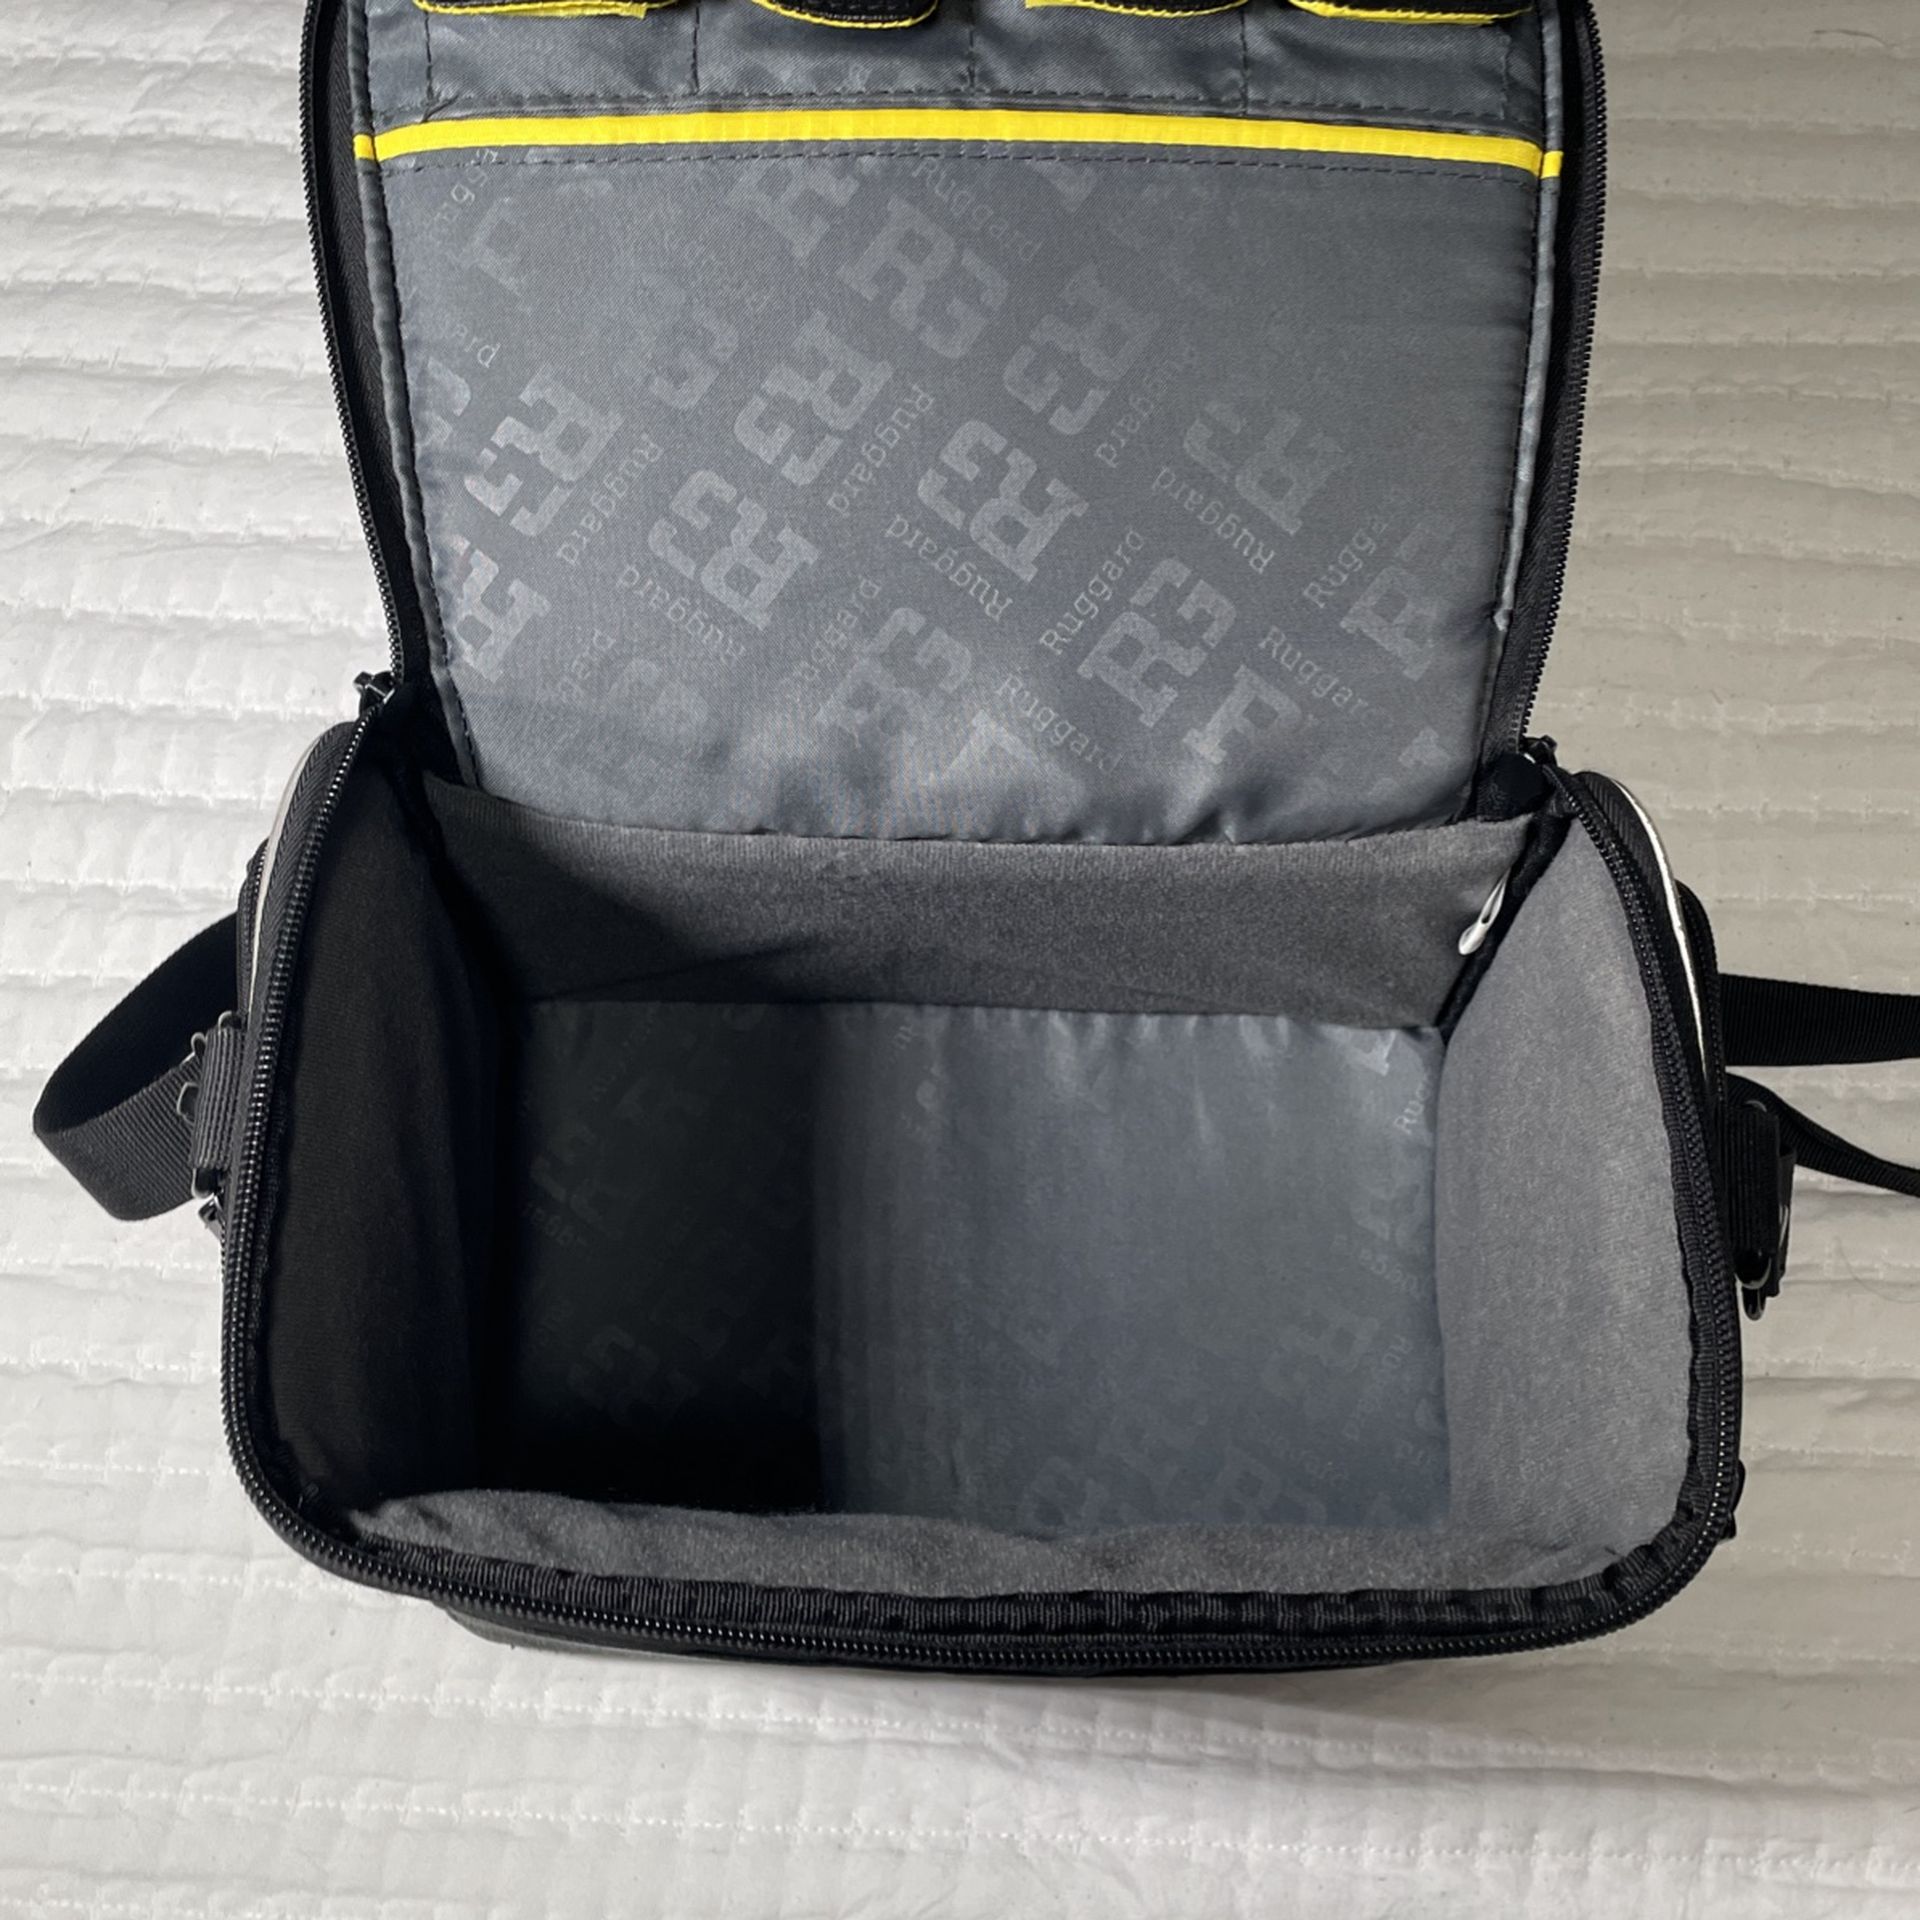 ruggard journey camera bag 